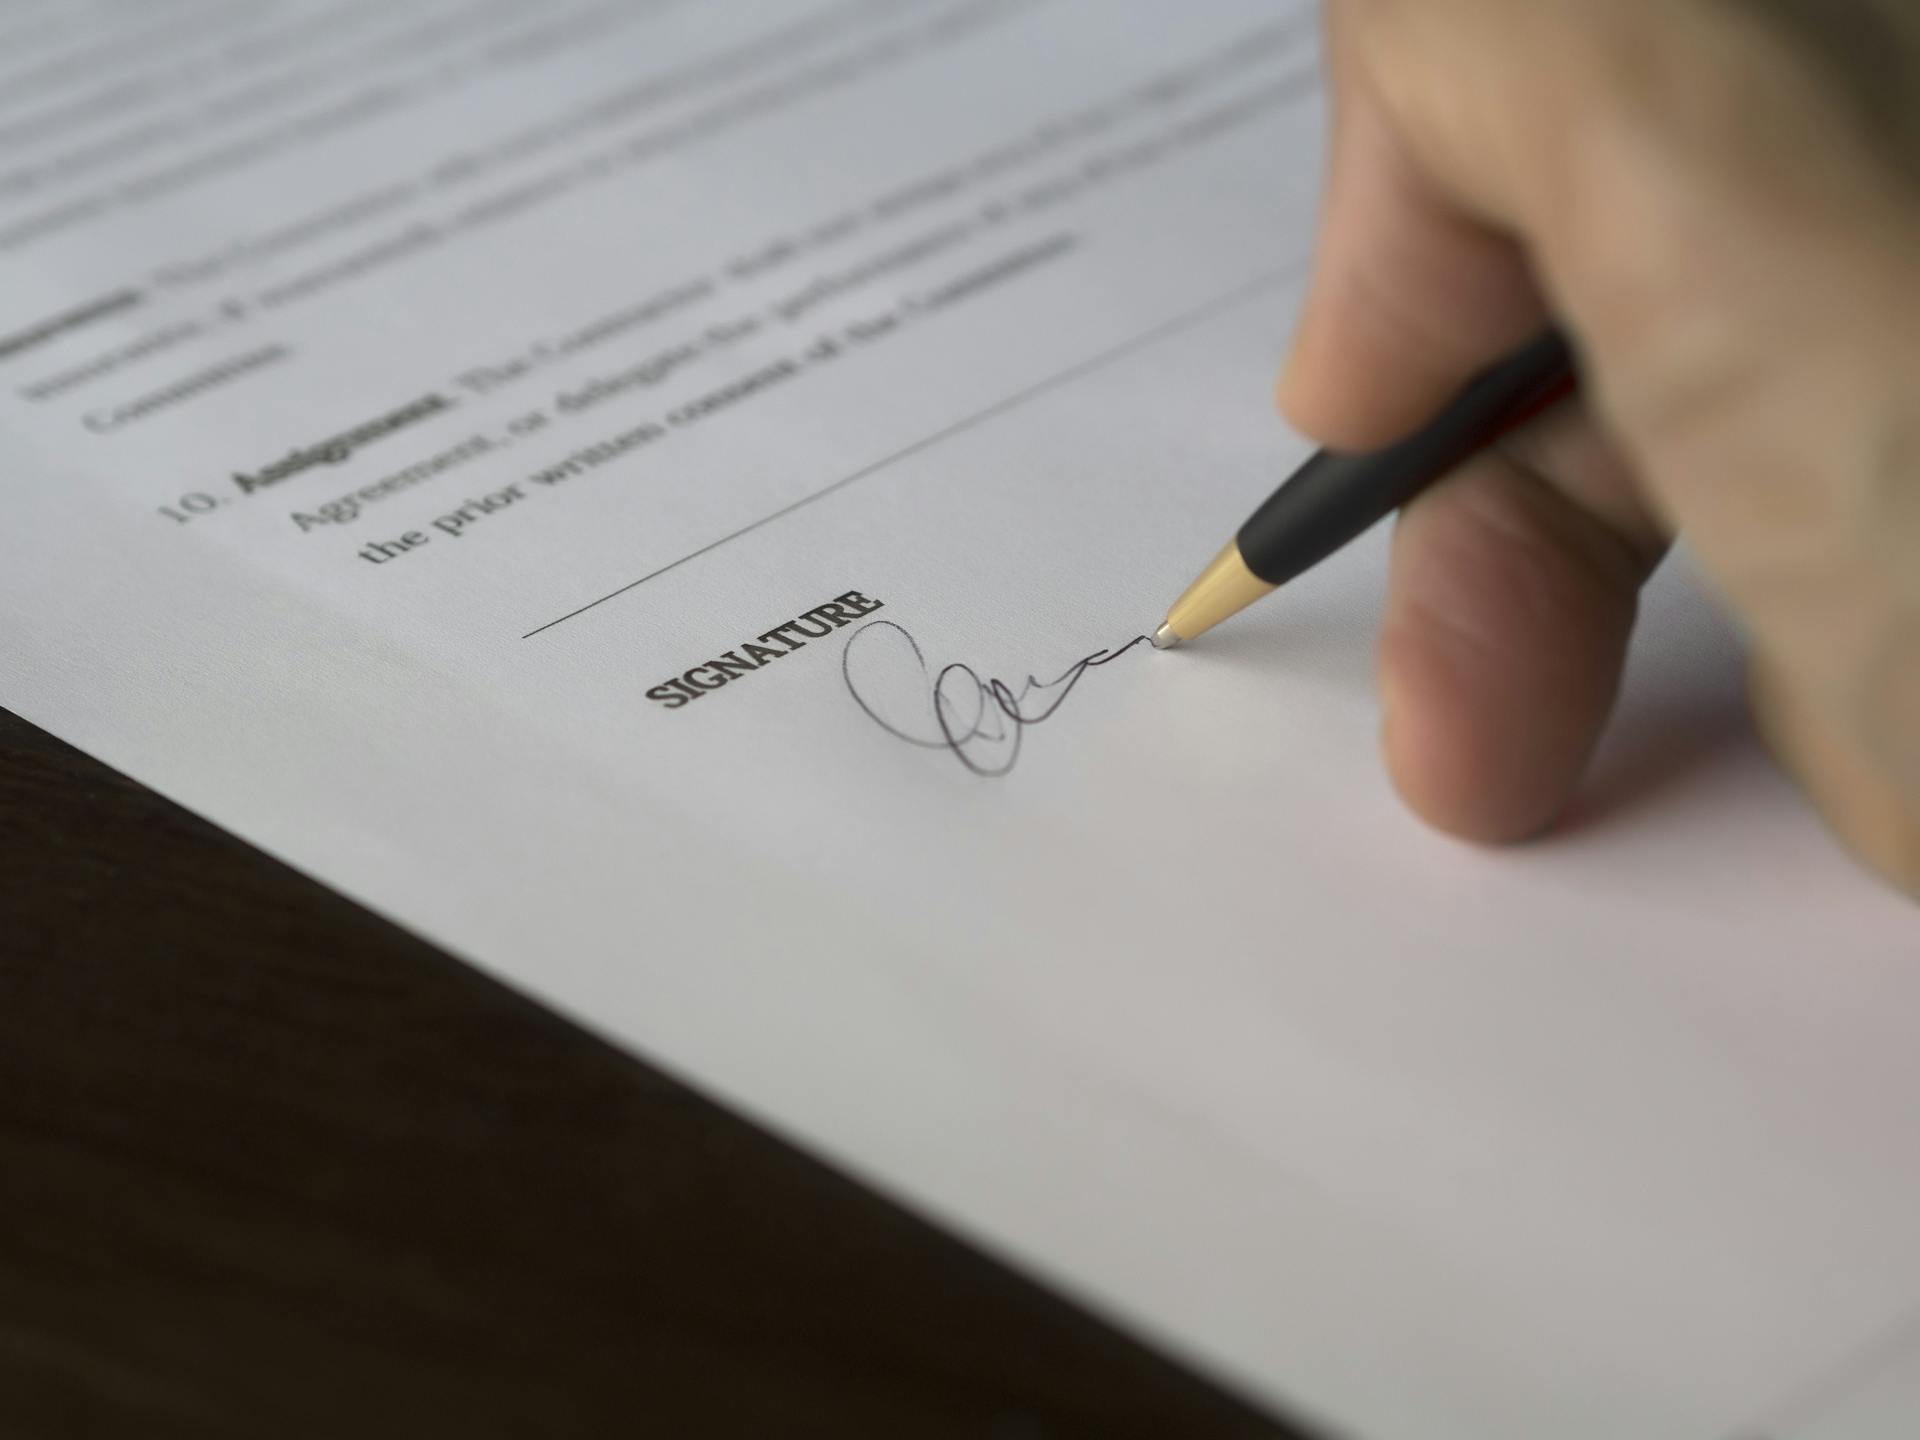 Una persona firmando un documento | Foto: Pexels